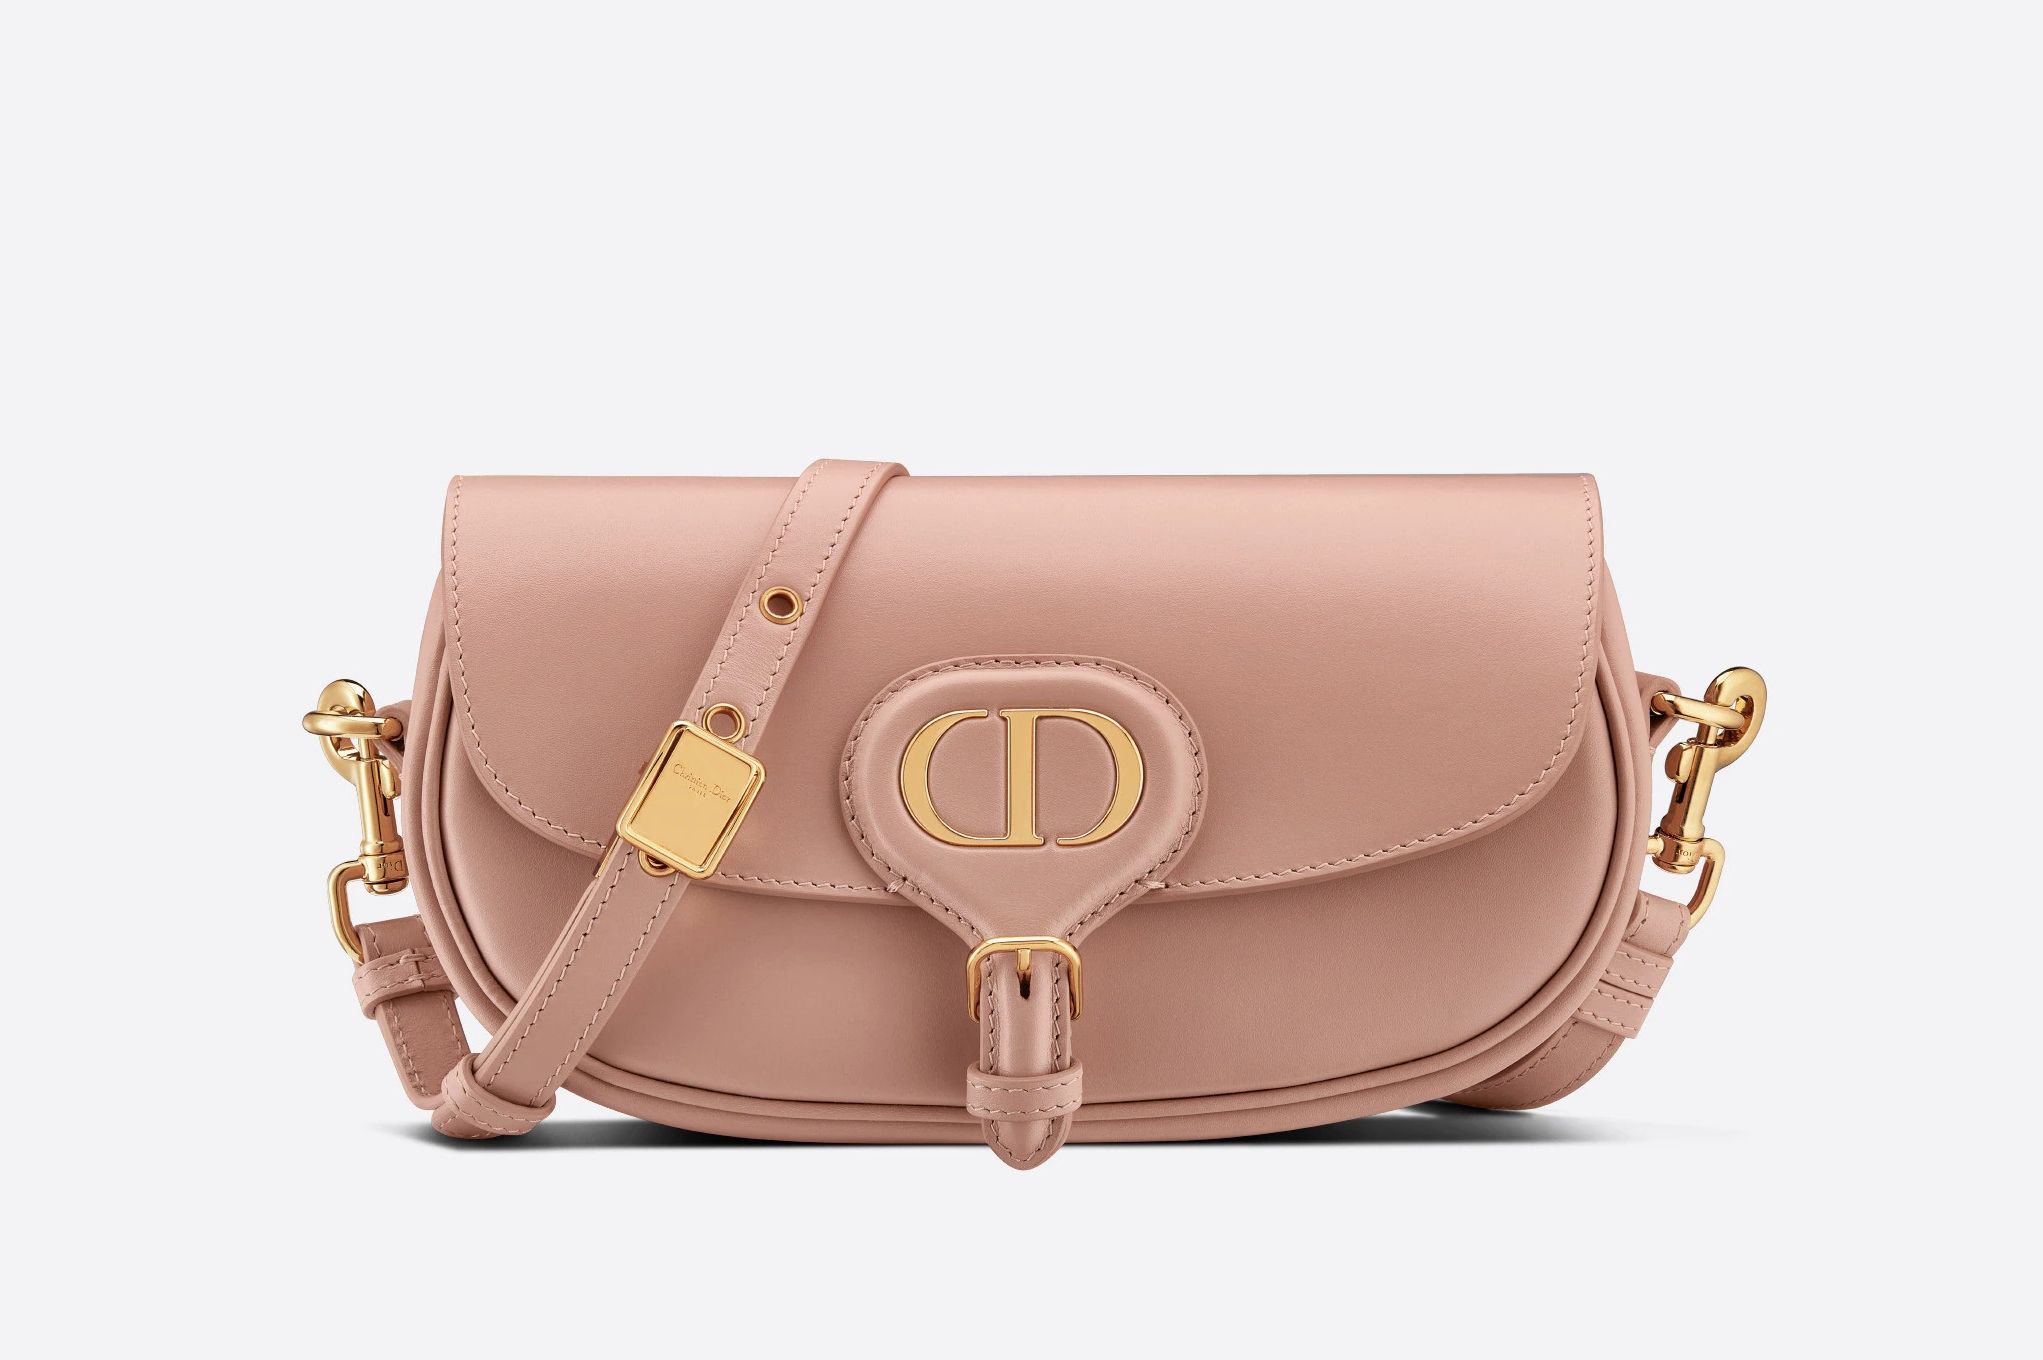 New Spring Bags- Chanel, Hermes, Dior & More  Selfridges Luxury Shopping  Weekend Vlog 